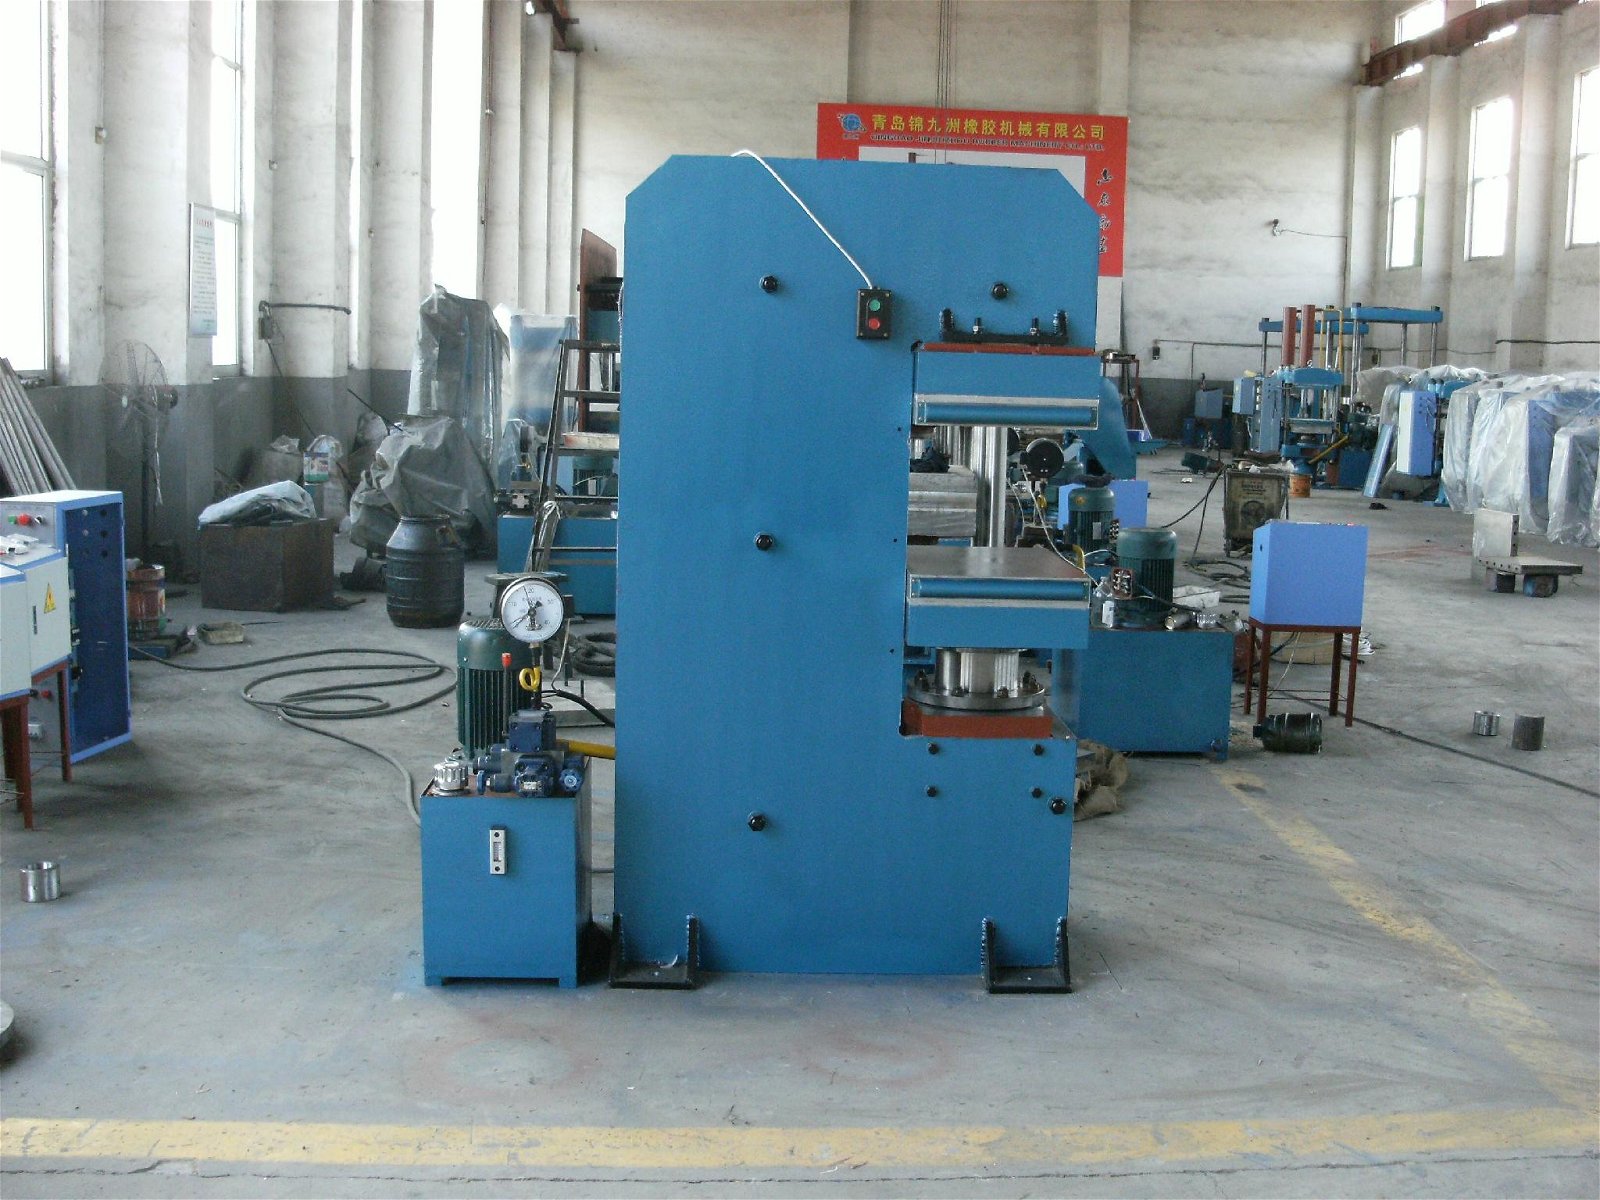 100T rubber hydraulic press vulcanizing machine in qingdao price negotiable